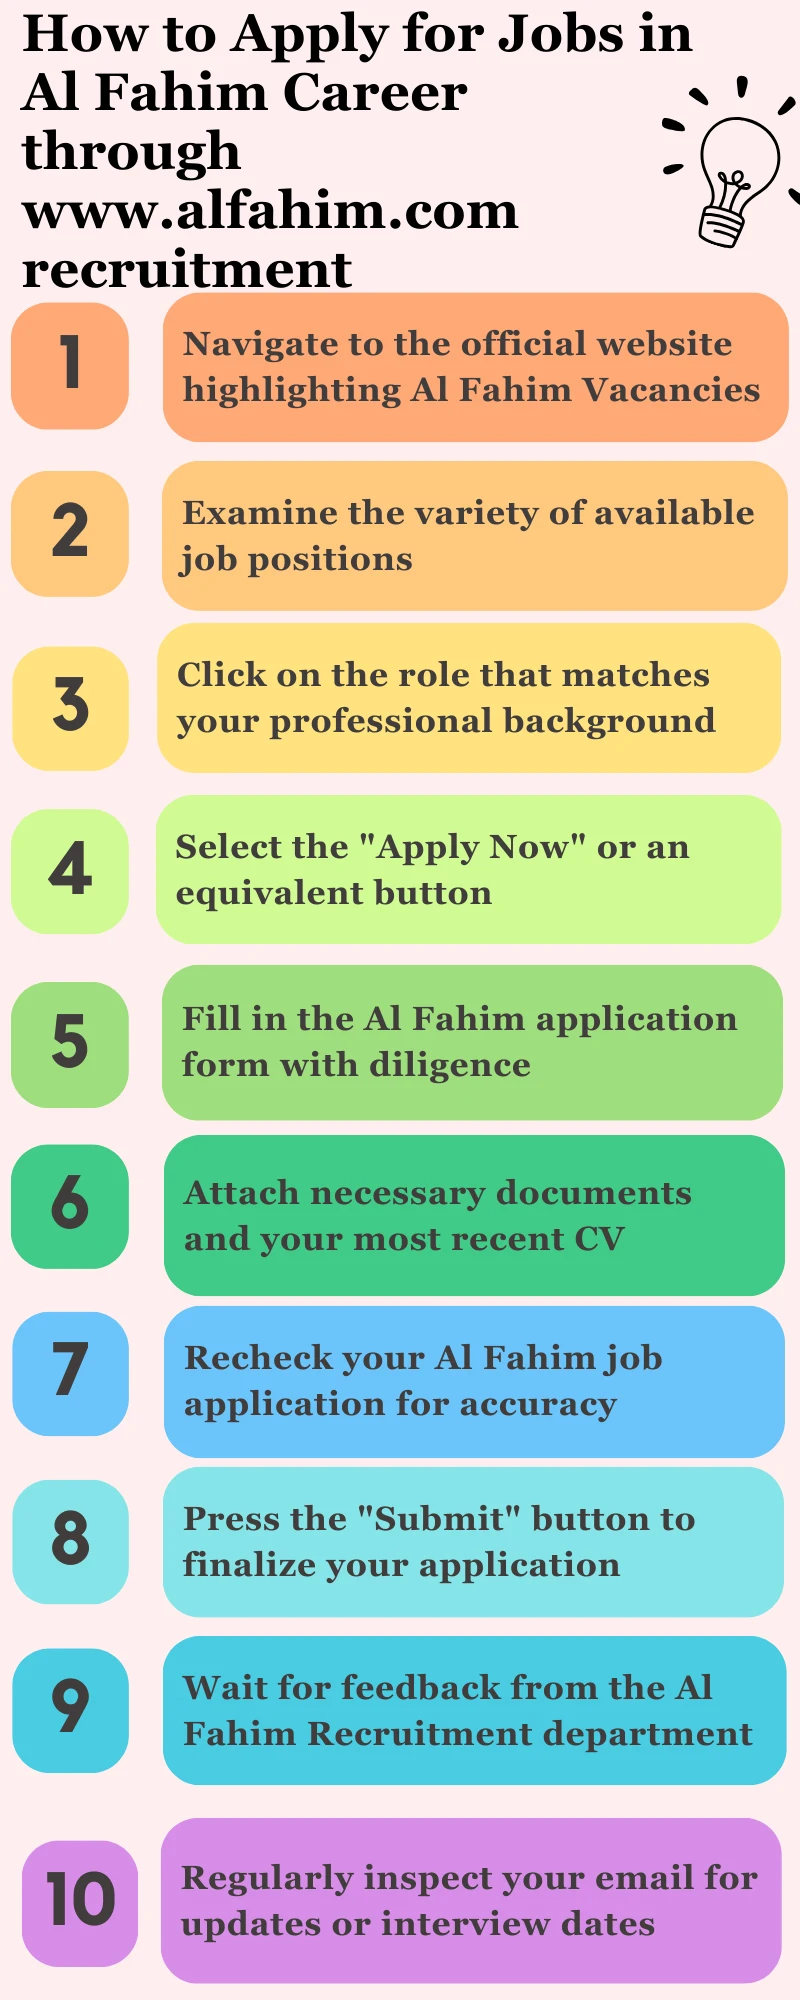 How to Apply for Jobs in Al Fahim Career through www.alfahim.com recruitment